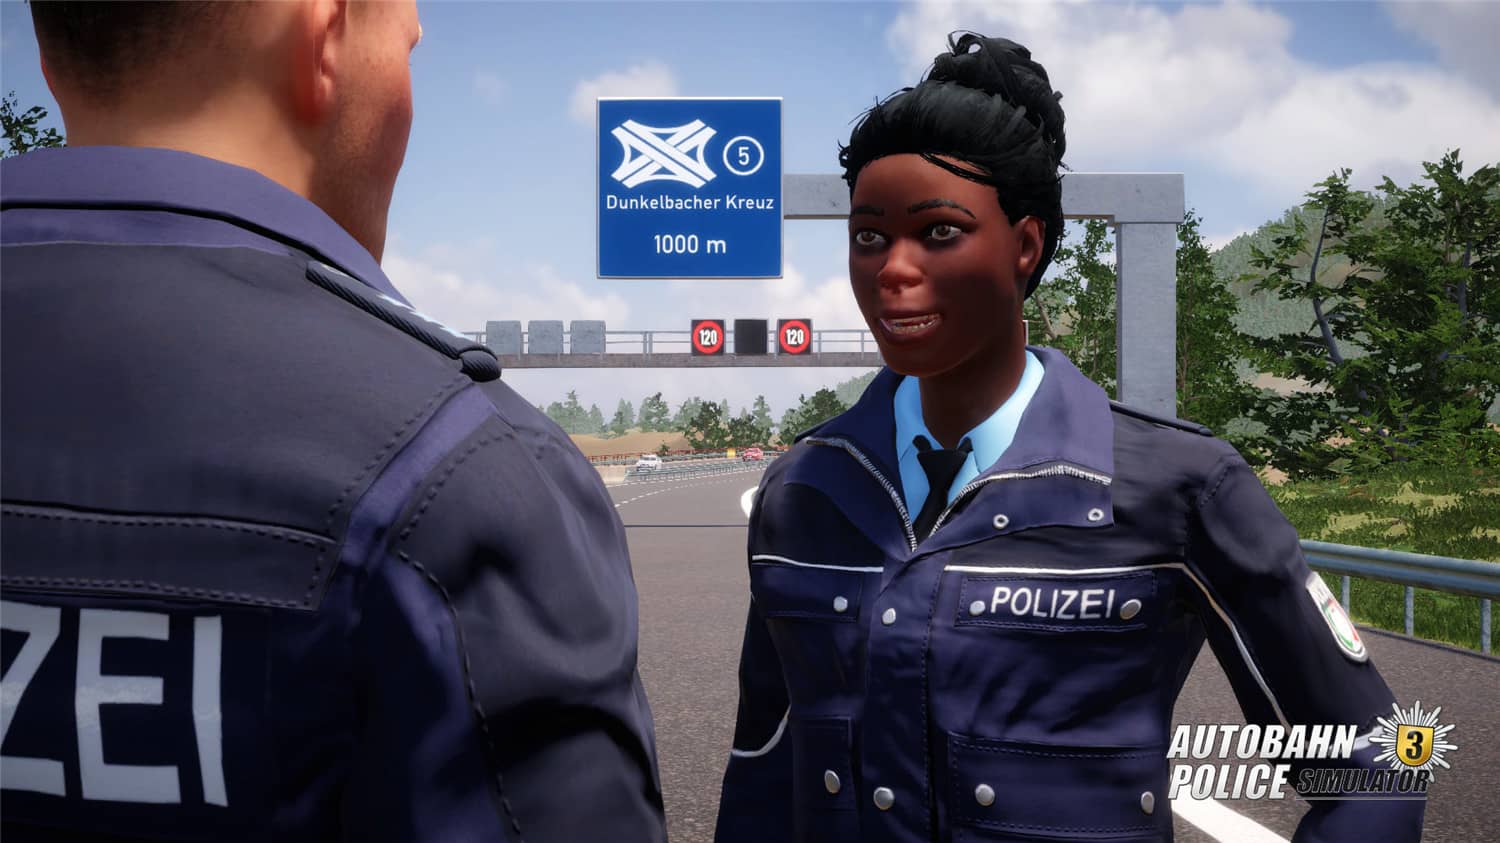 高速公路警察模拟3/Autobahn Police Simulator 3 v1.1.0